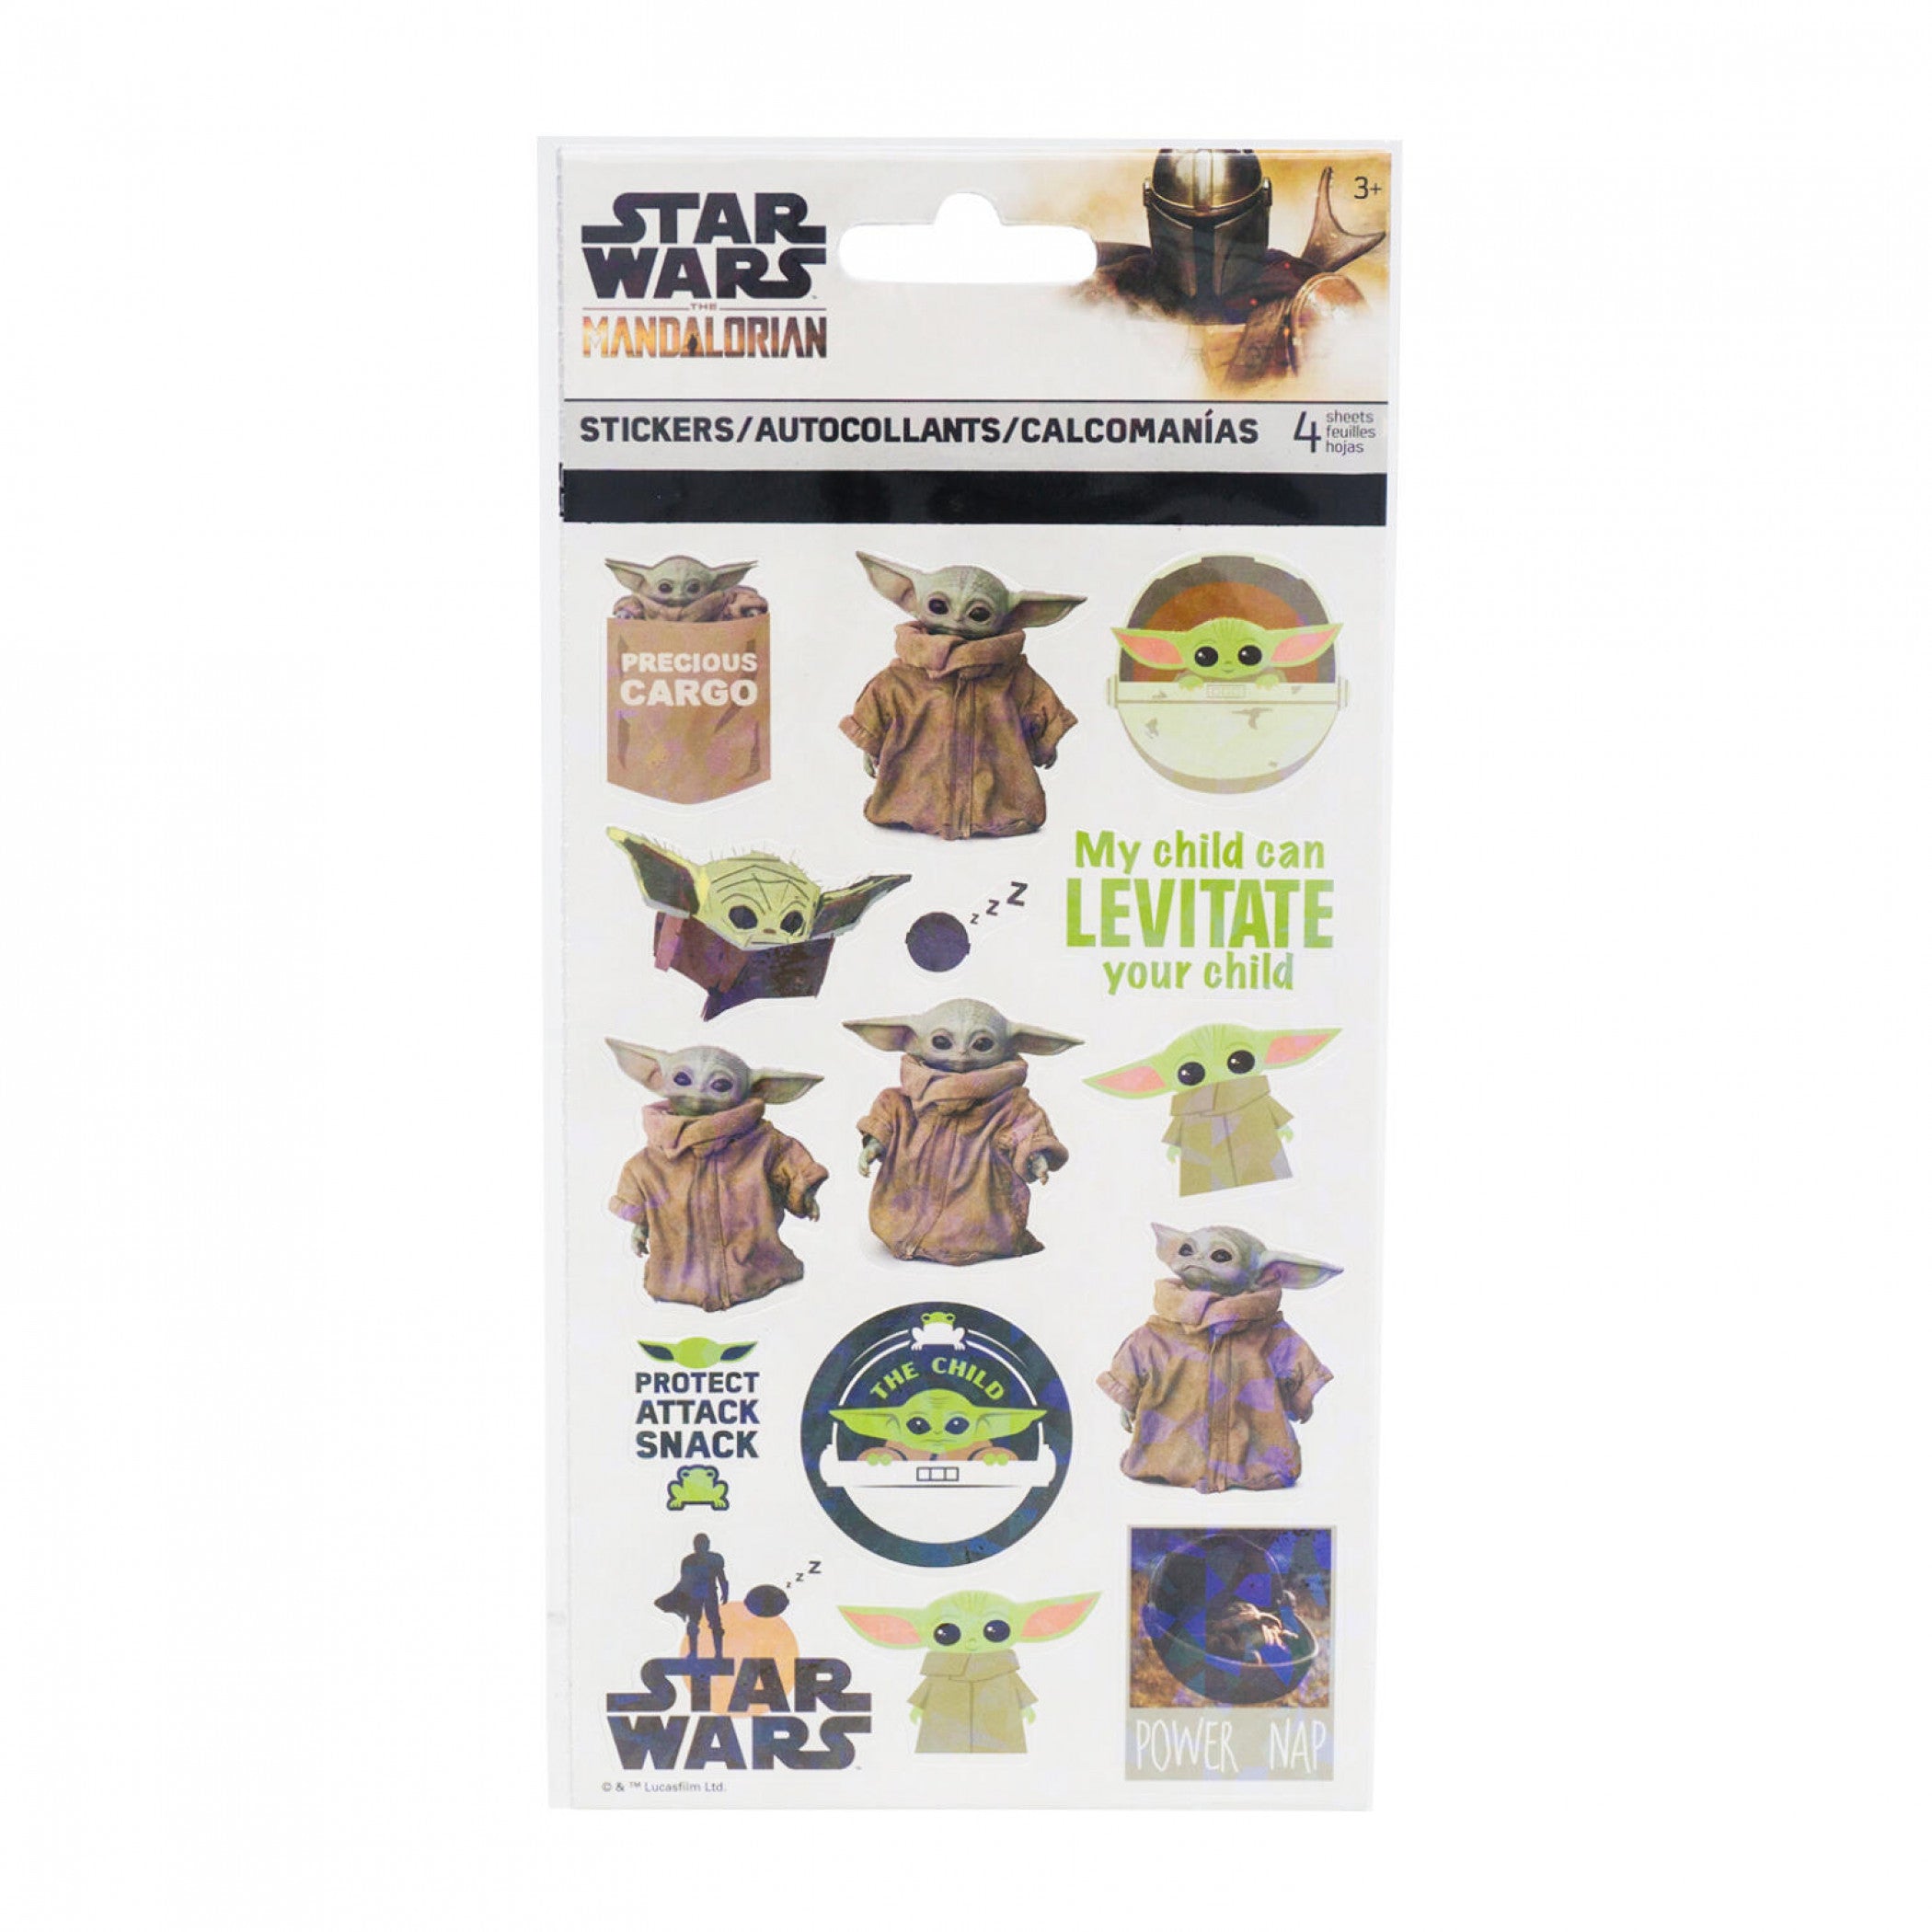 Star Wars The Mandalorian The Child Grogu Sticker Sheet 4-Pack